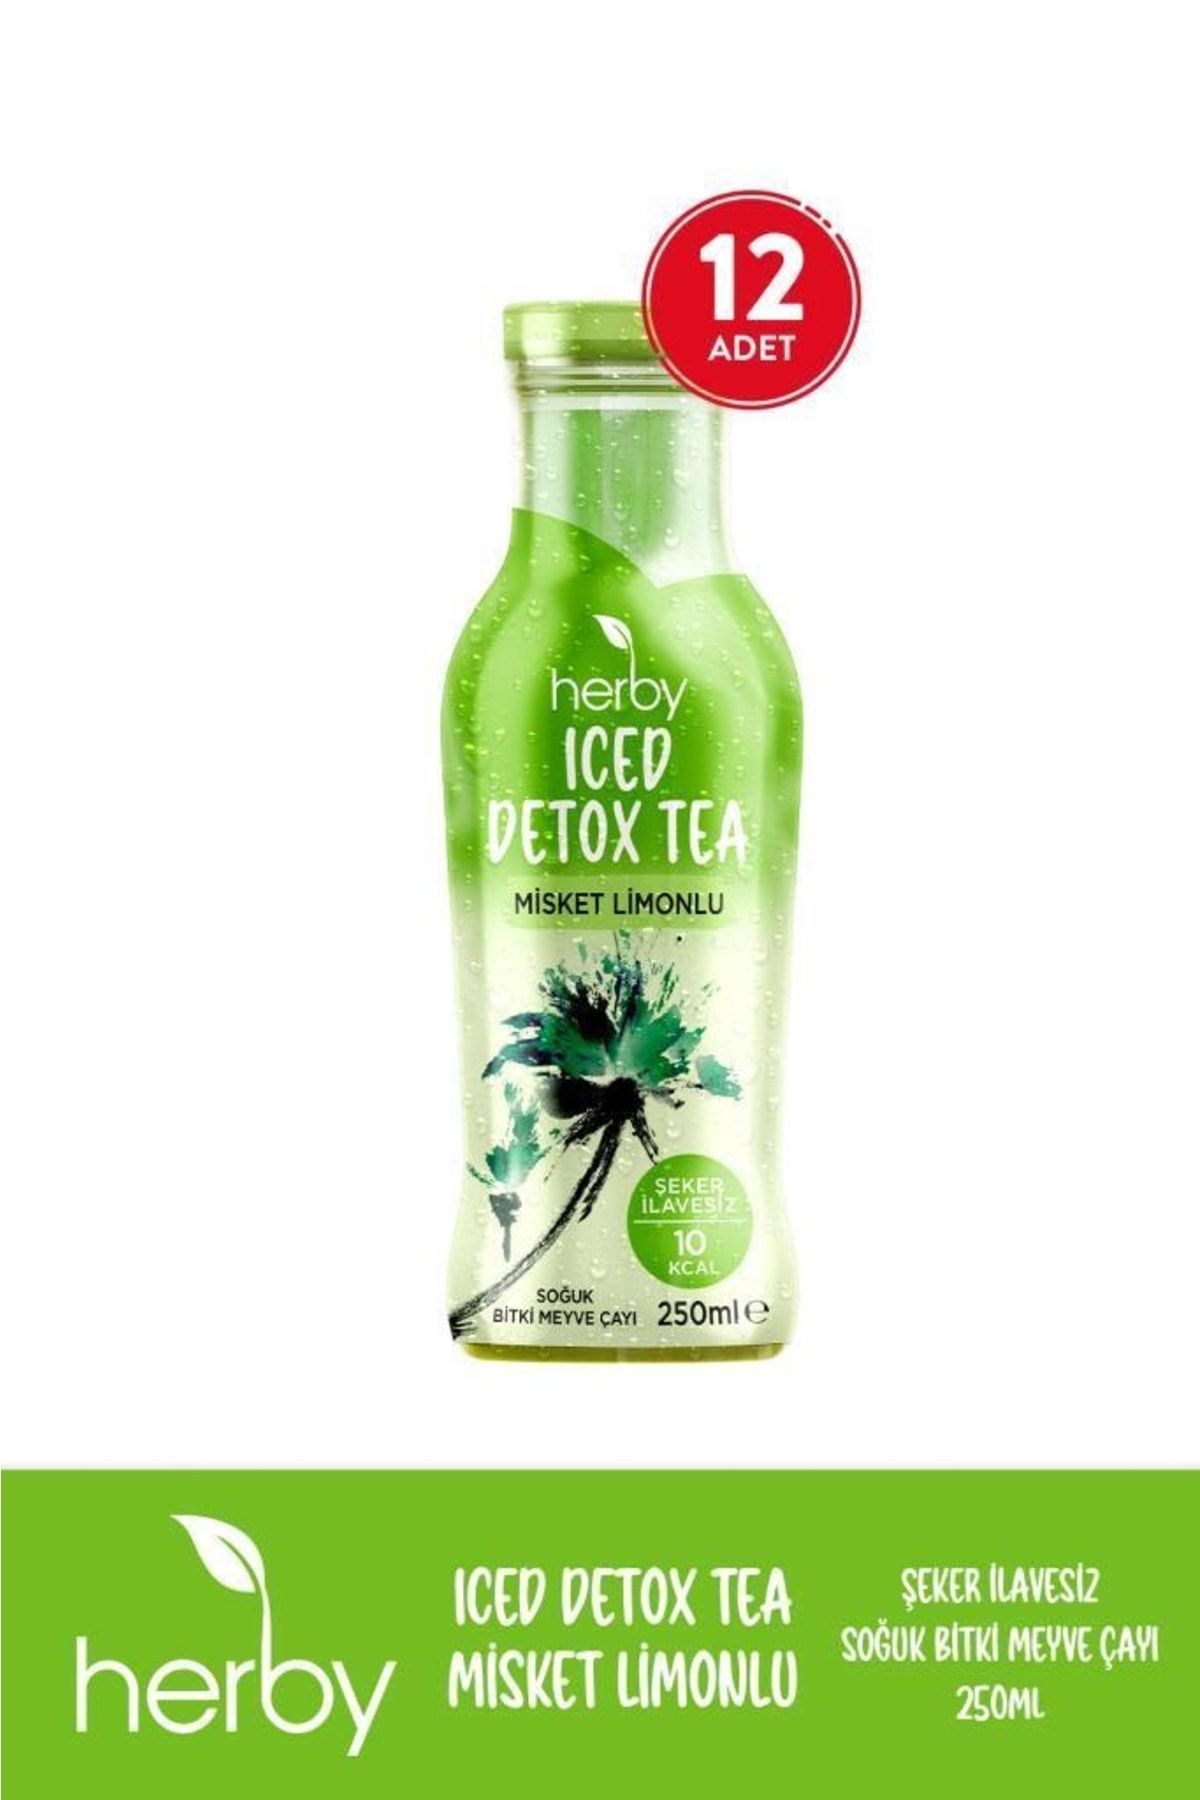 Herby Soğuk Çay Şeker Ilavesiz 12'li Iced Detox Tea Misket Limonlu 250 ml